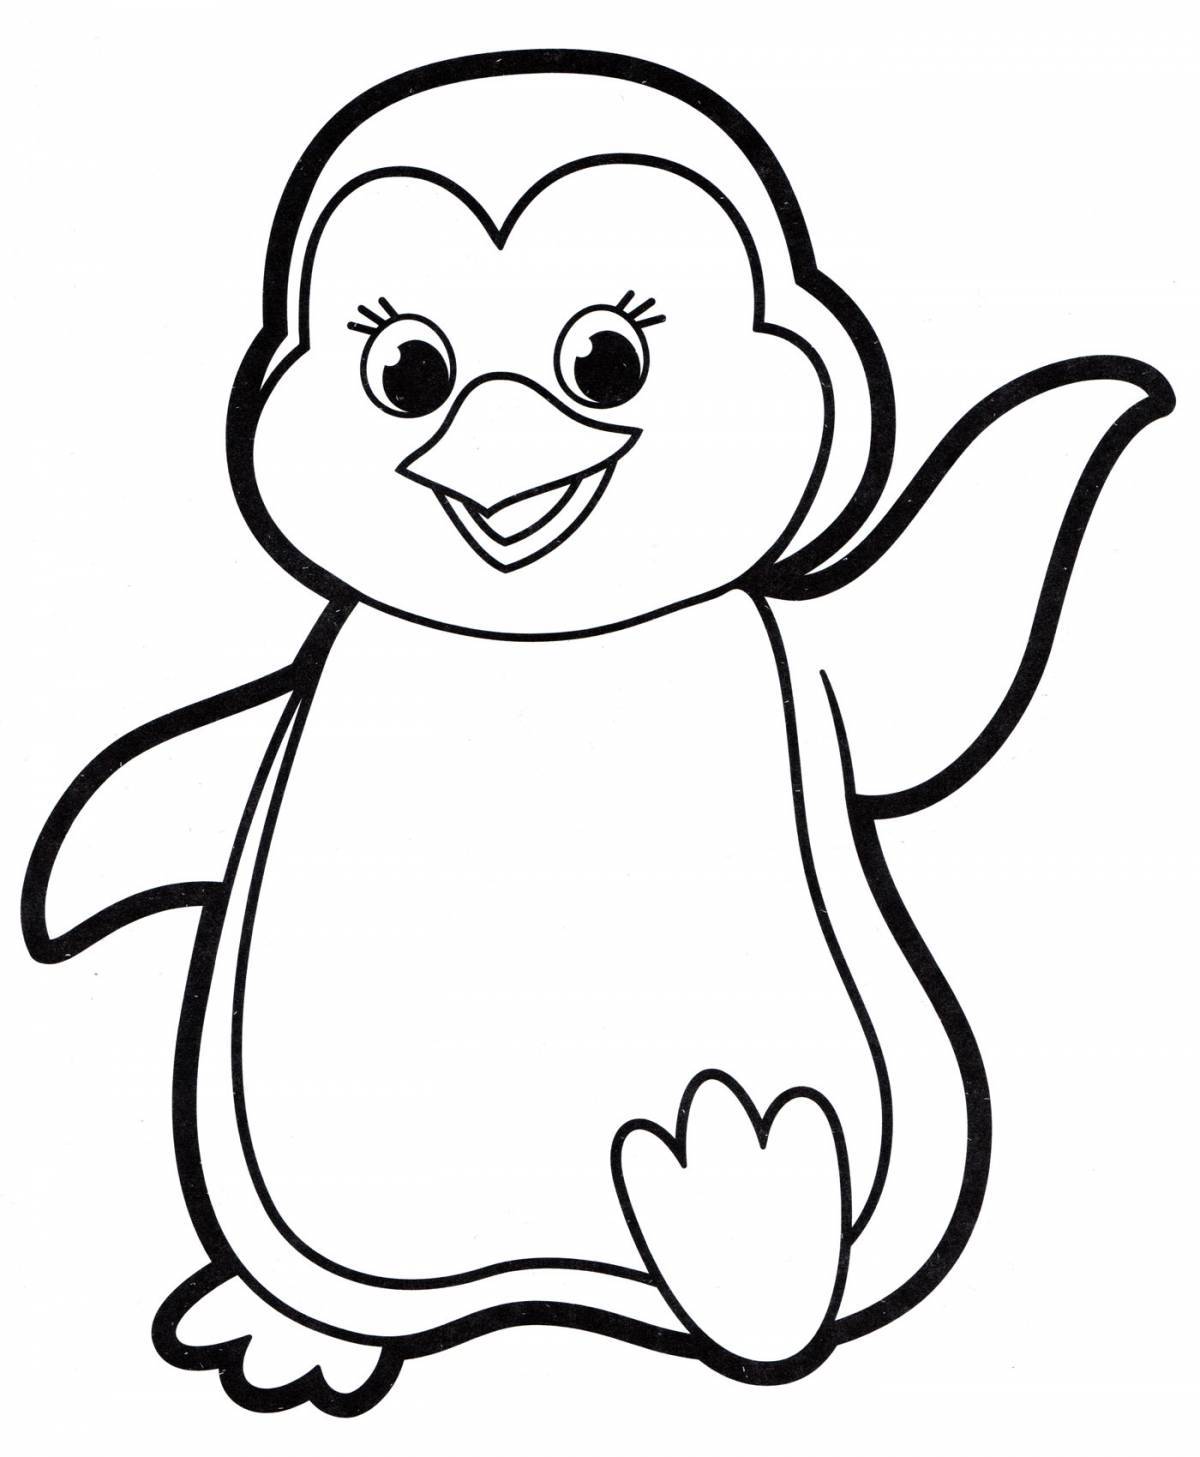 Glitter penguin coloring book for kids